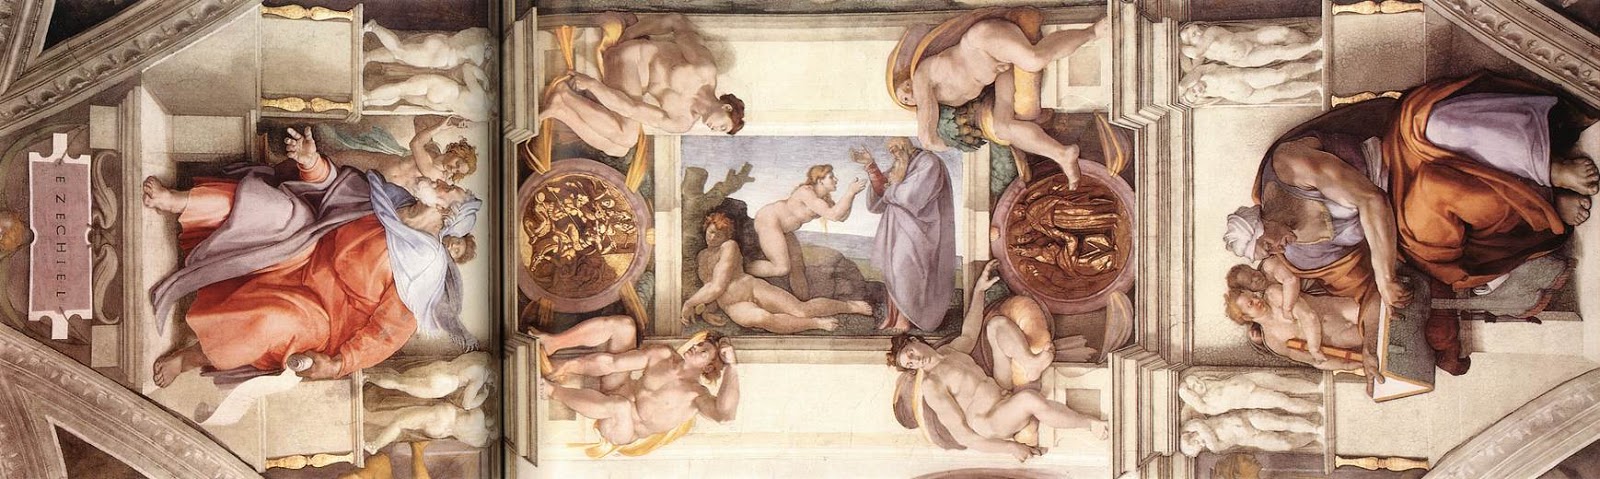 Michelangelo+Buonarroti-1475-1564 (378).jpg